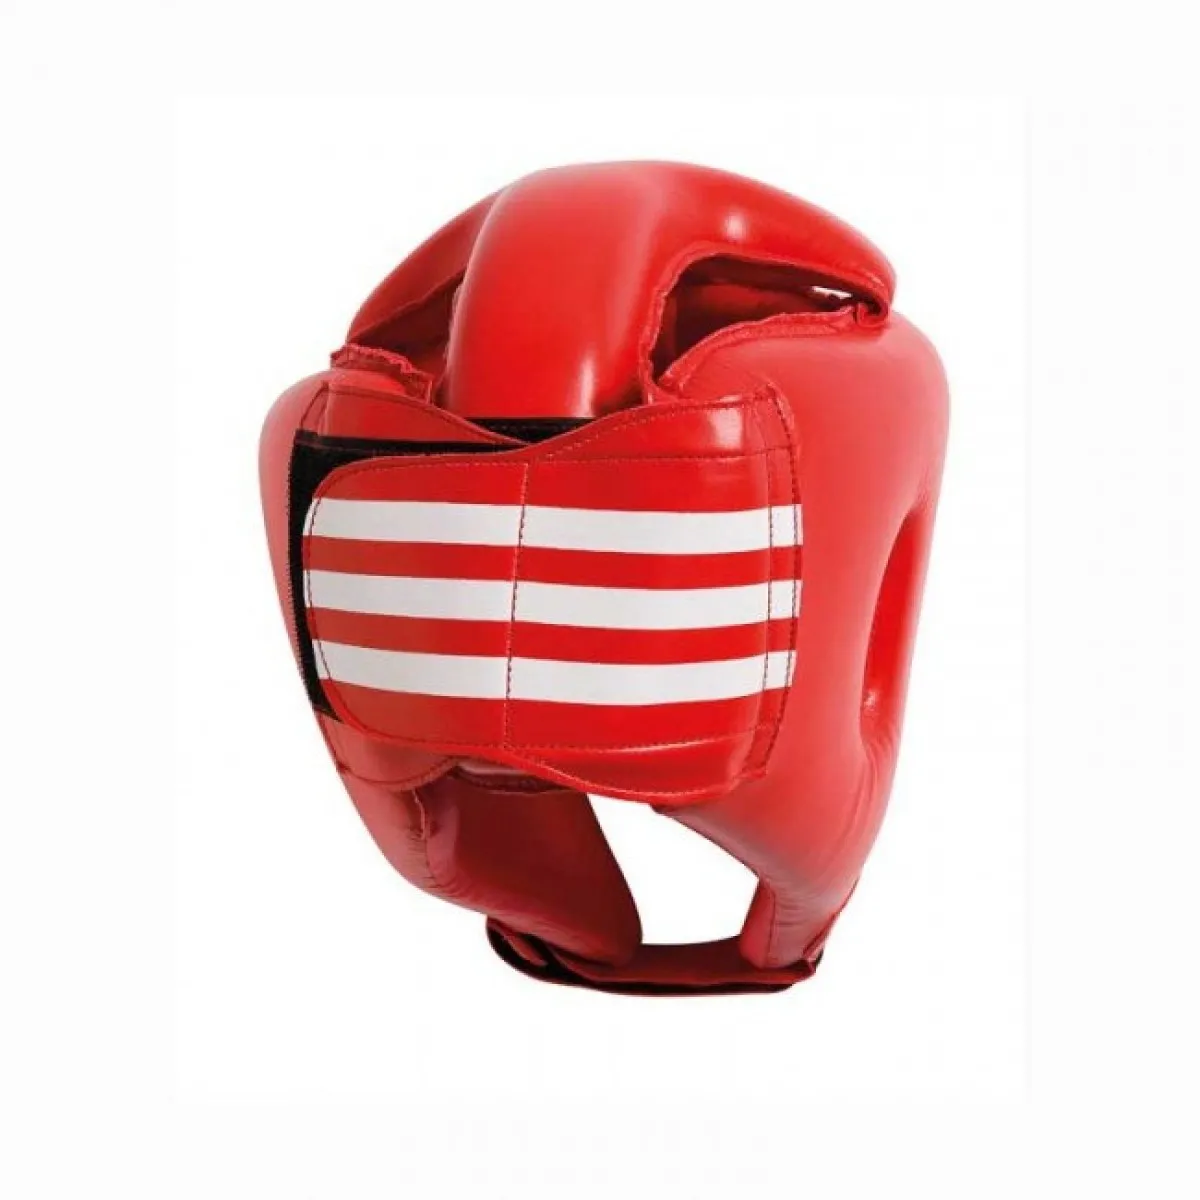 adidas Boxing/Kickboxing Headguard Kids - Rookie red